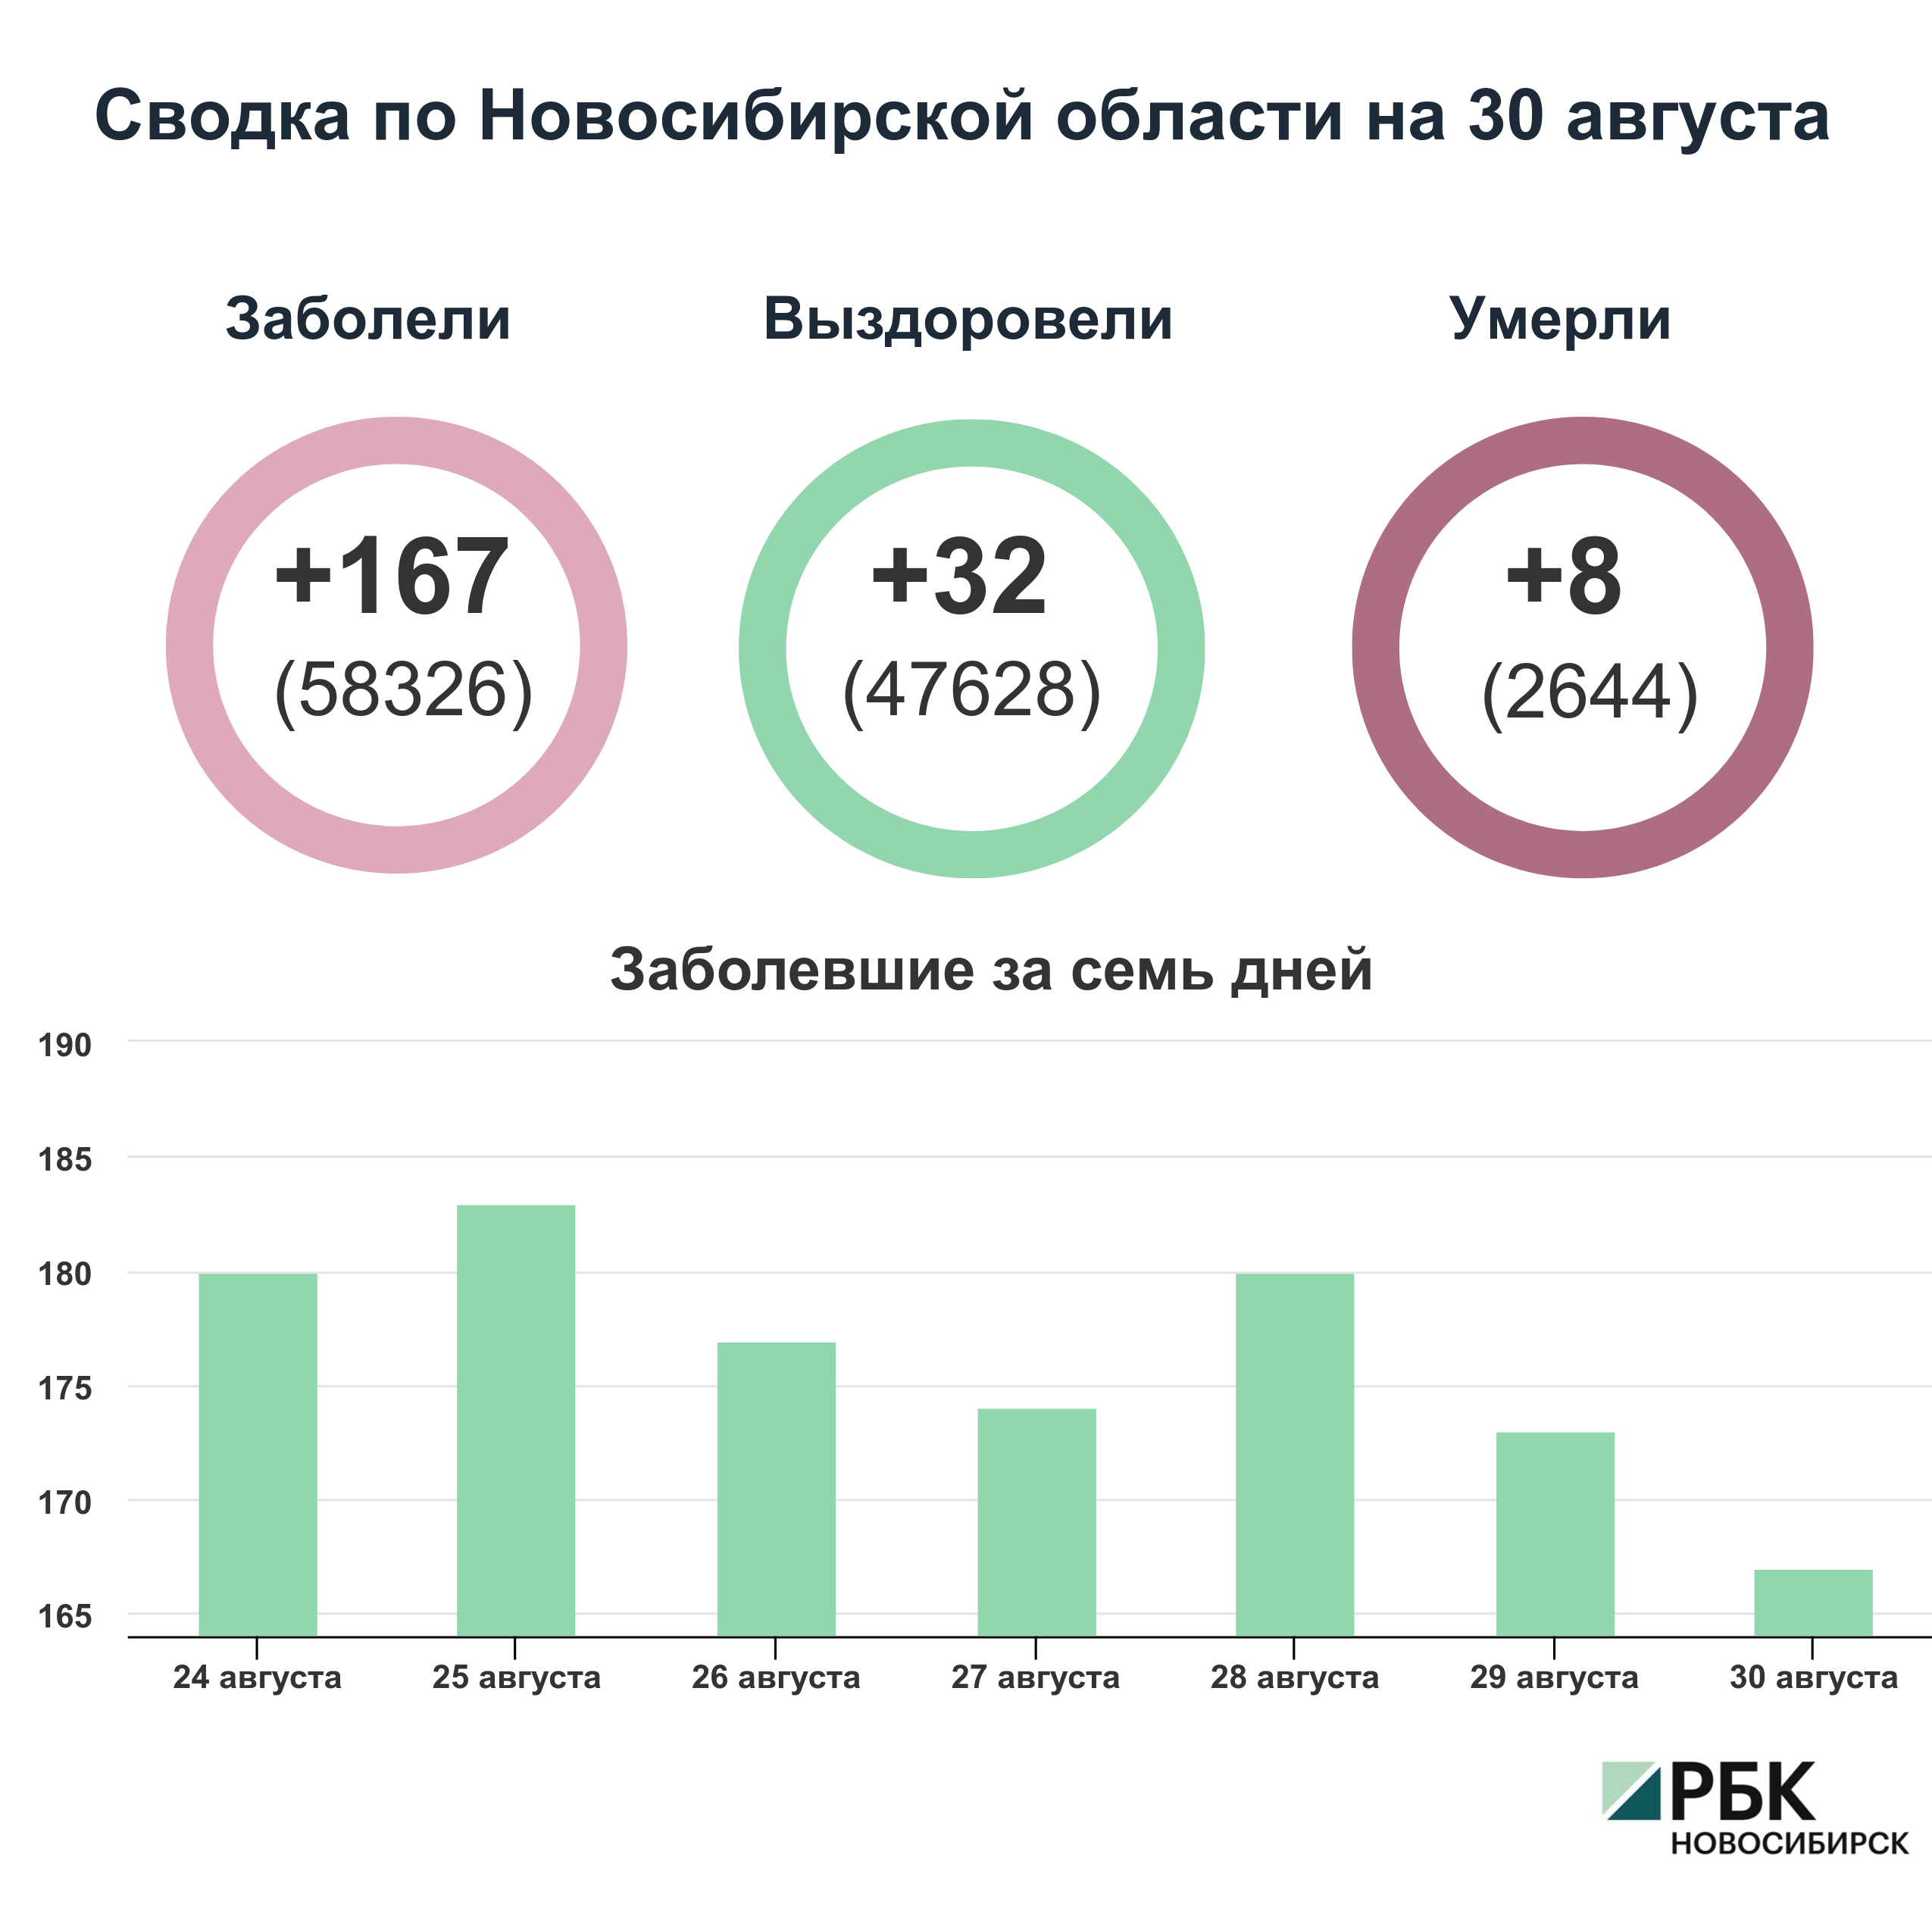 Коронавирус в Новосибирске: сводка на 30 августа